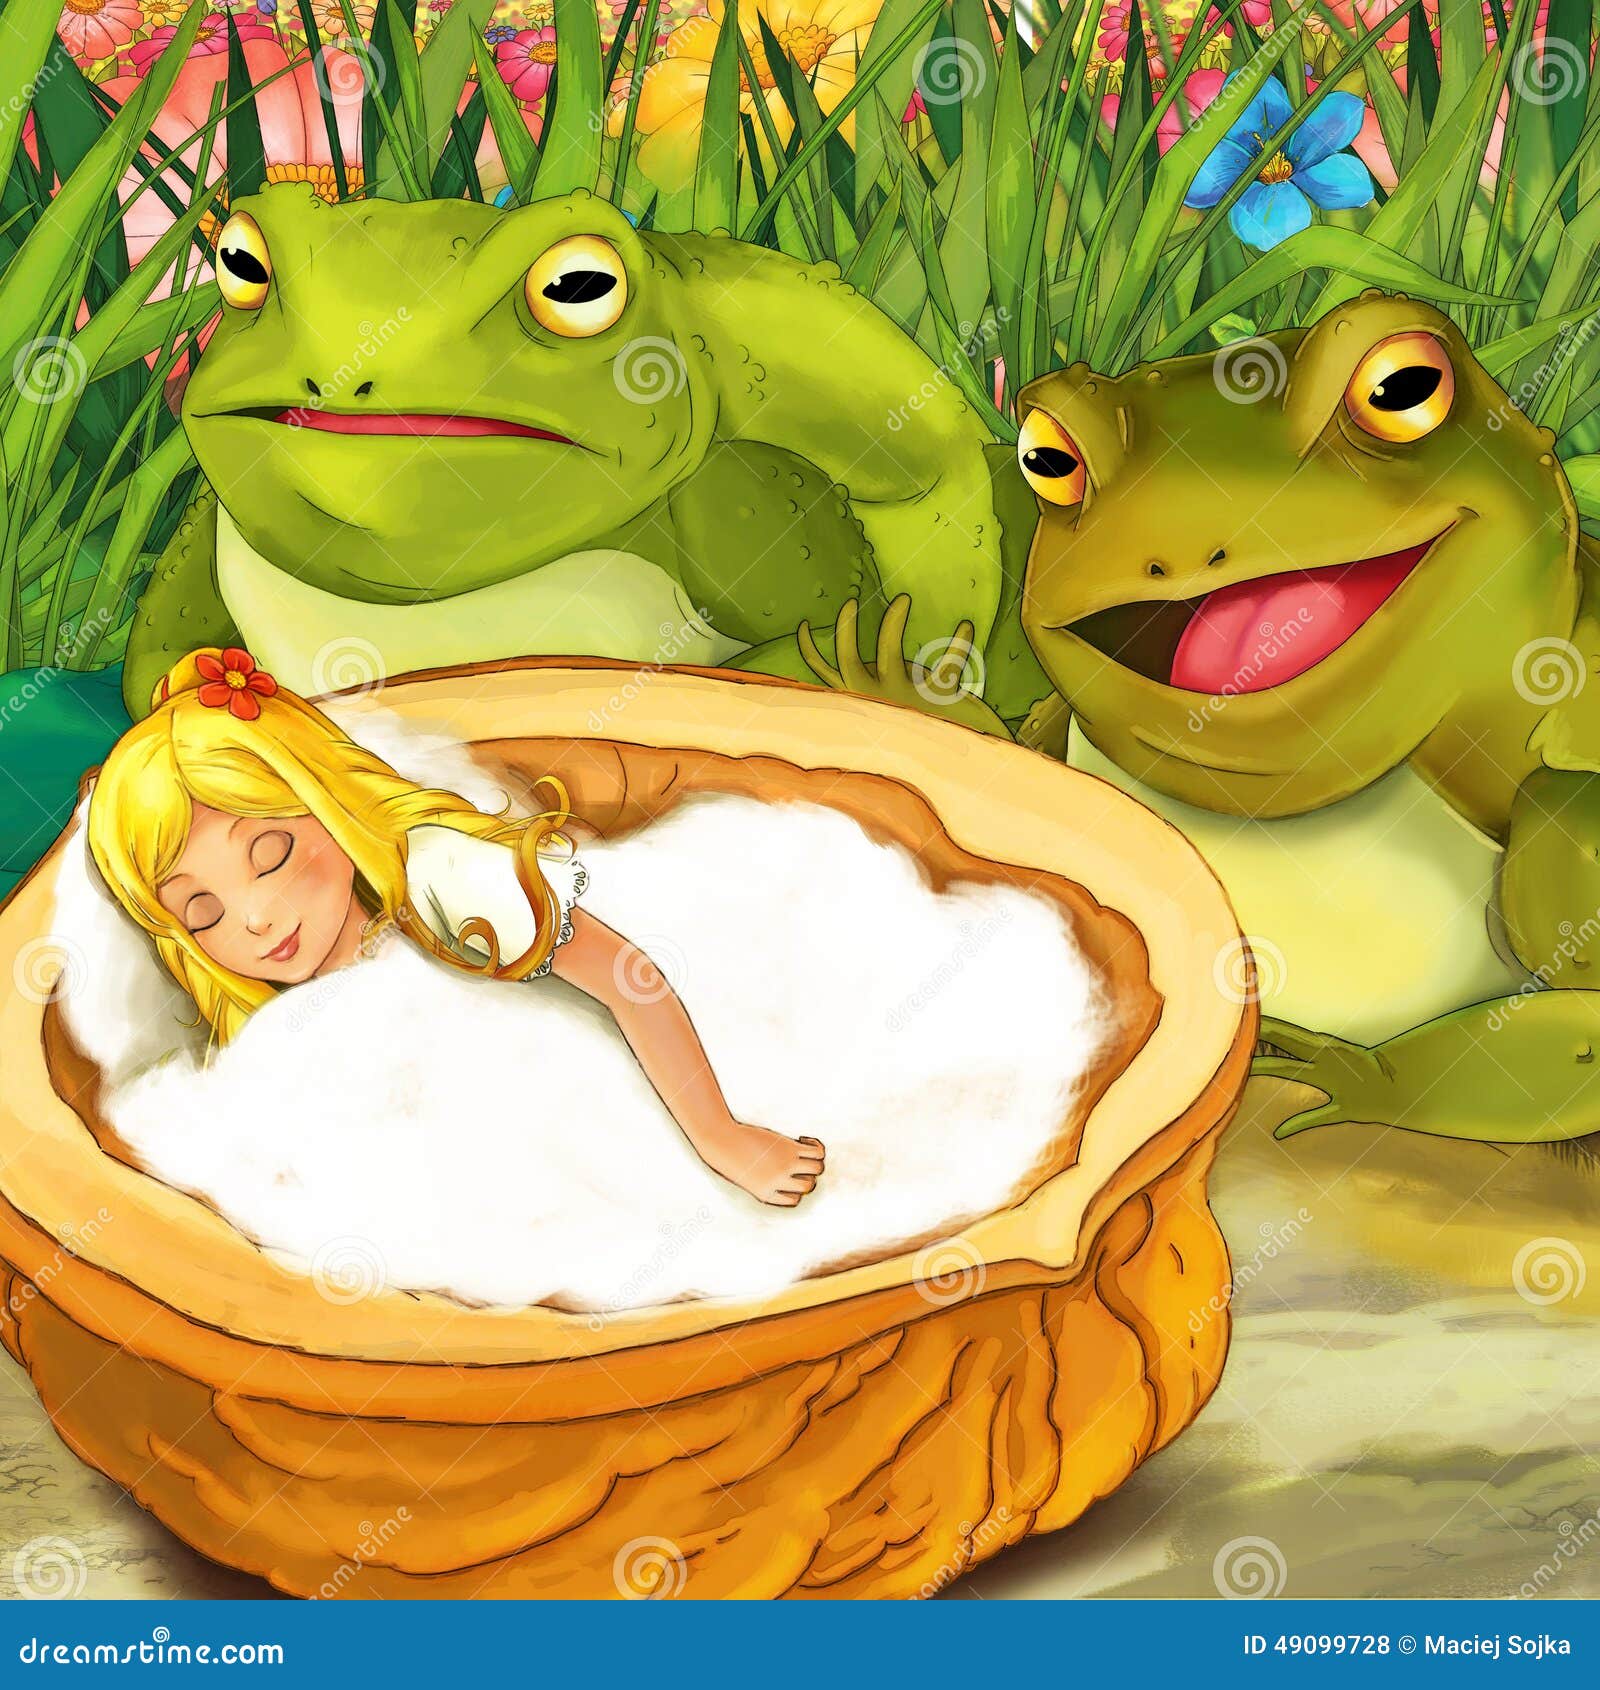 Cartoon Frog Images - Free Download on Freepik